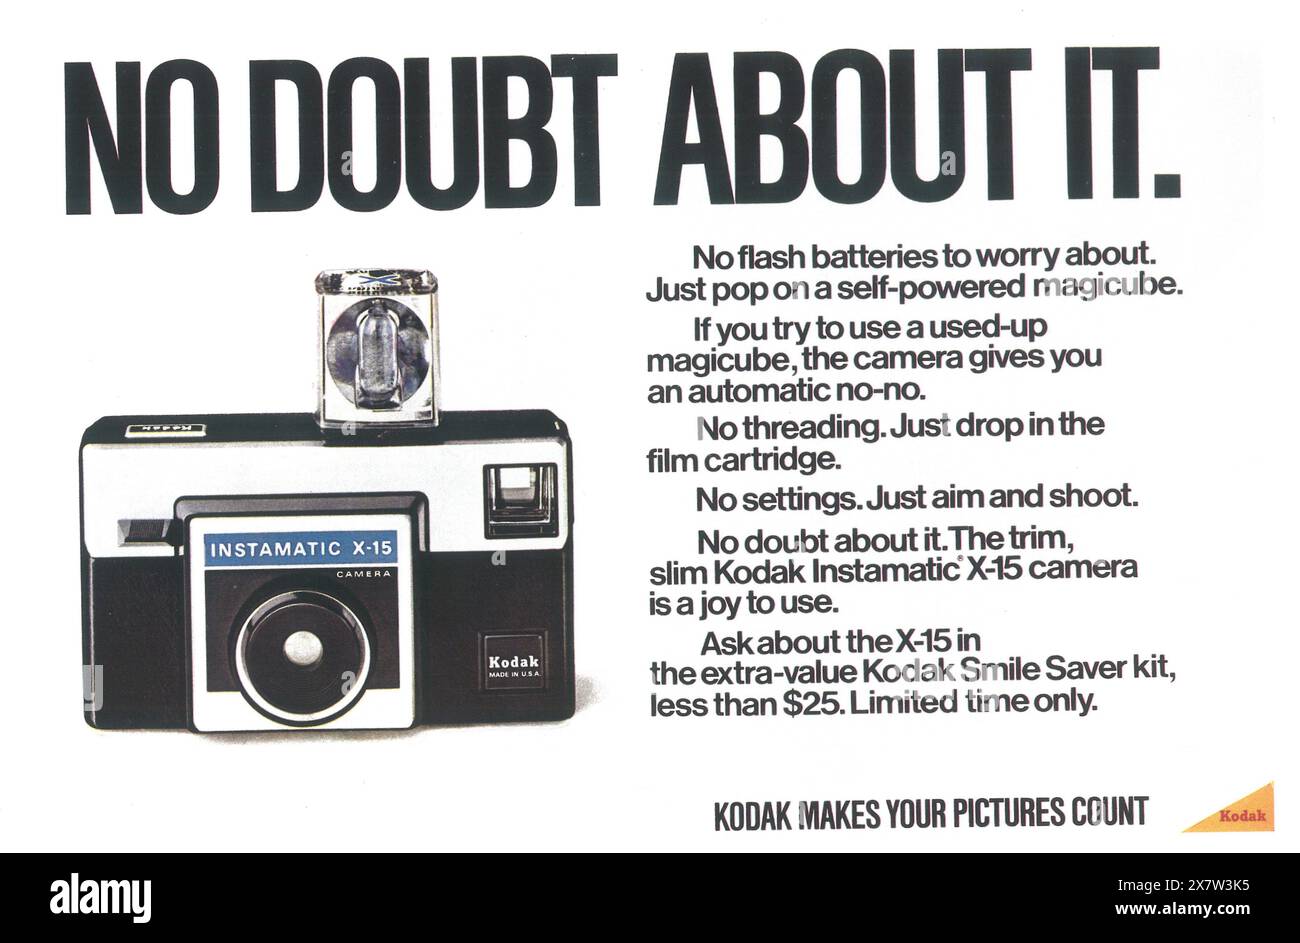 1971 annuncio Kodak Instamatic X-15 camera - "No Doubt About IT". Foto Stock